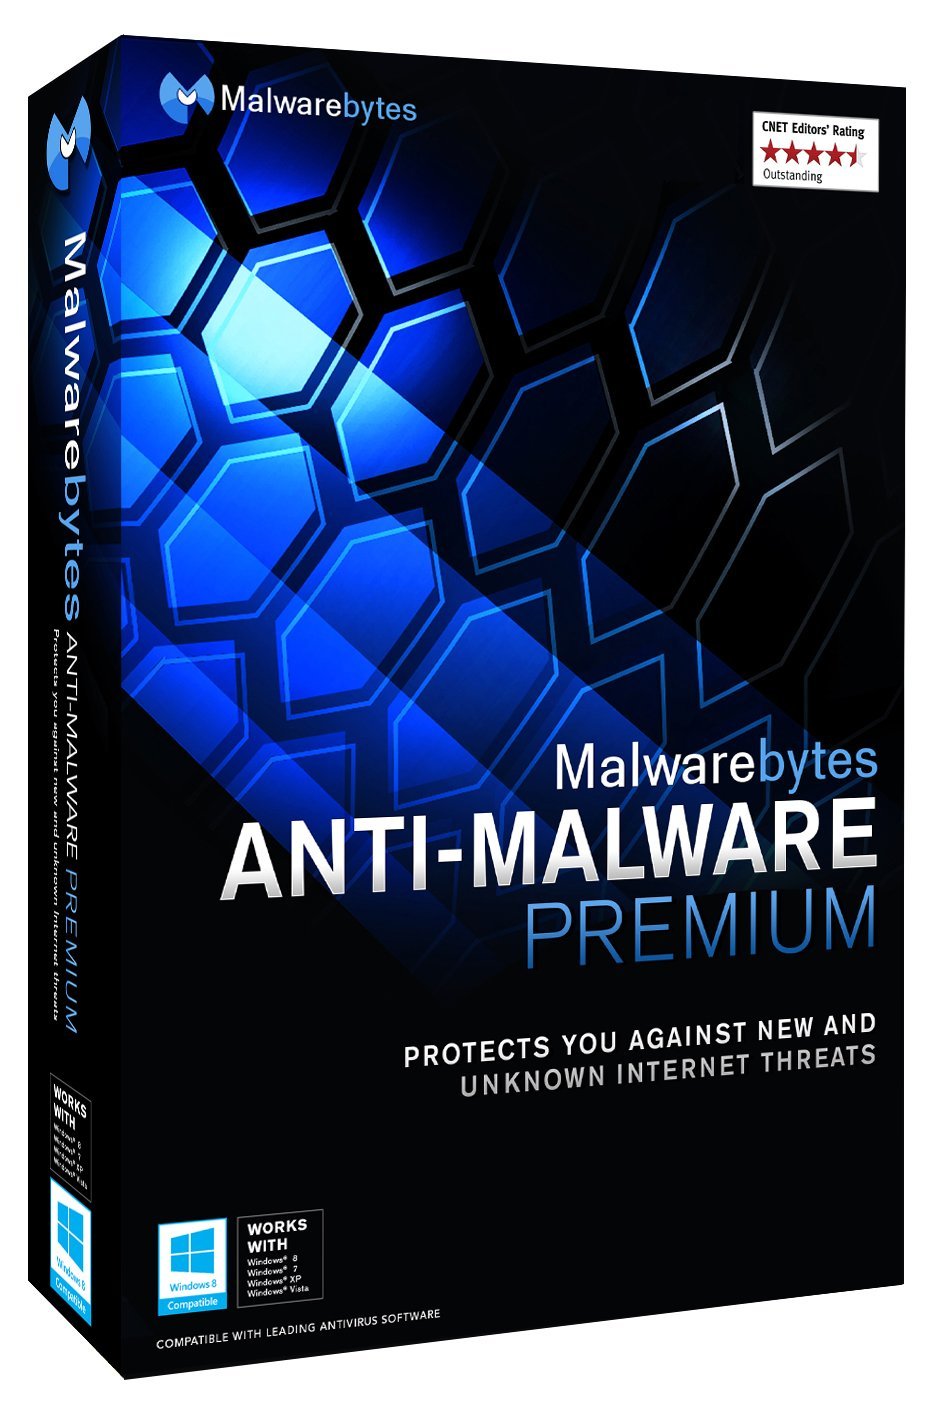 malwarebytes anti malware mbam exe download